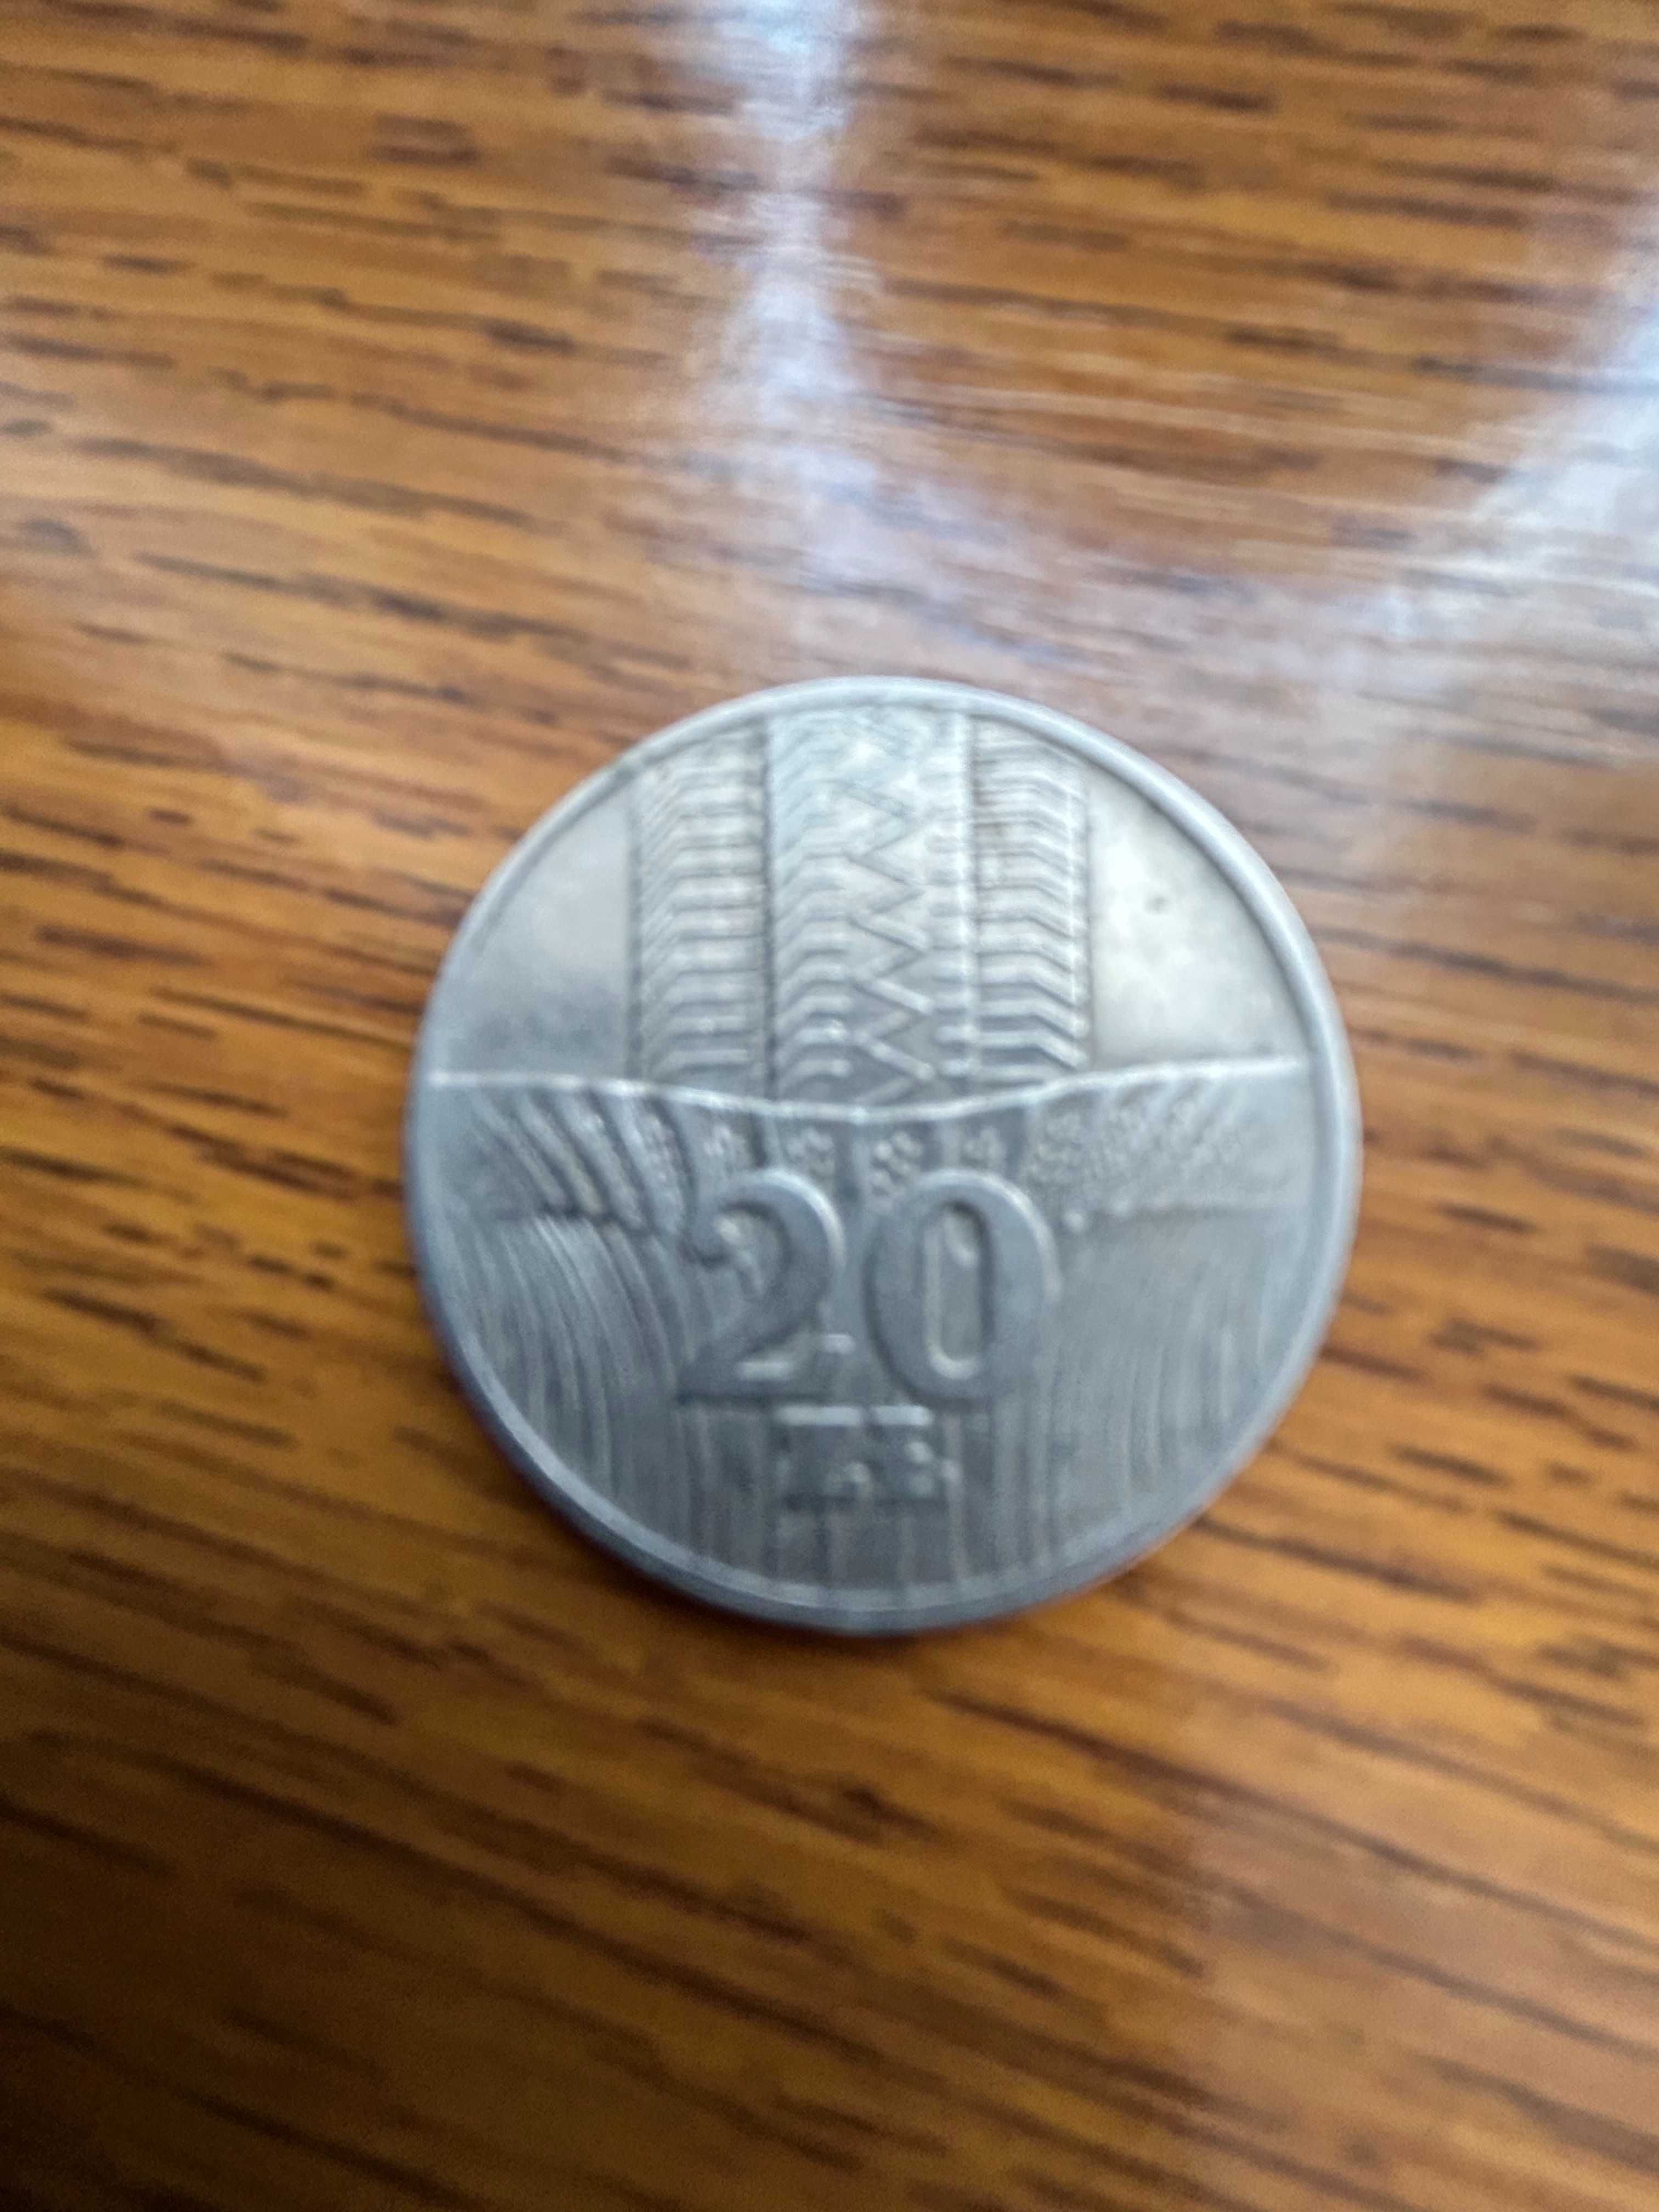 Moneta polska 20 zł z 1976 r.